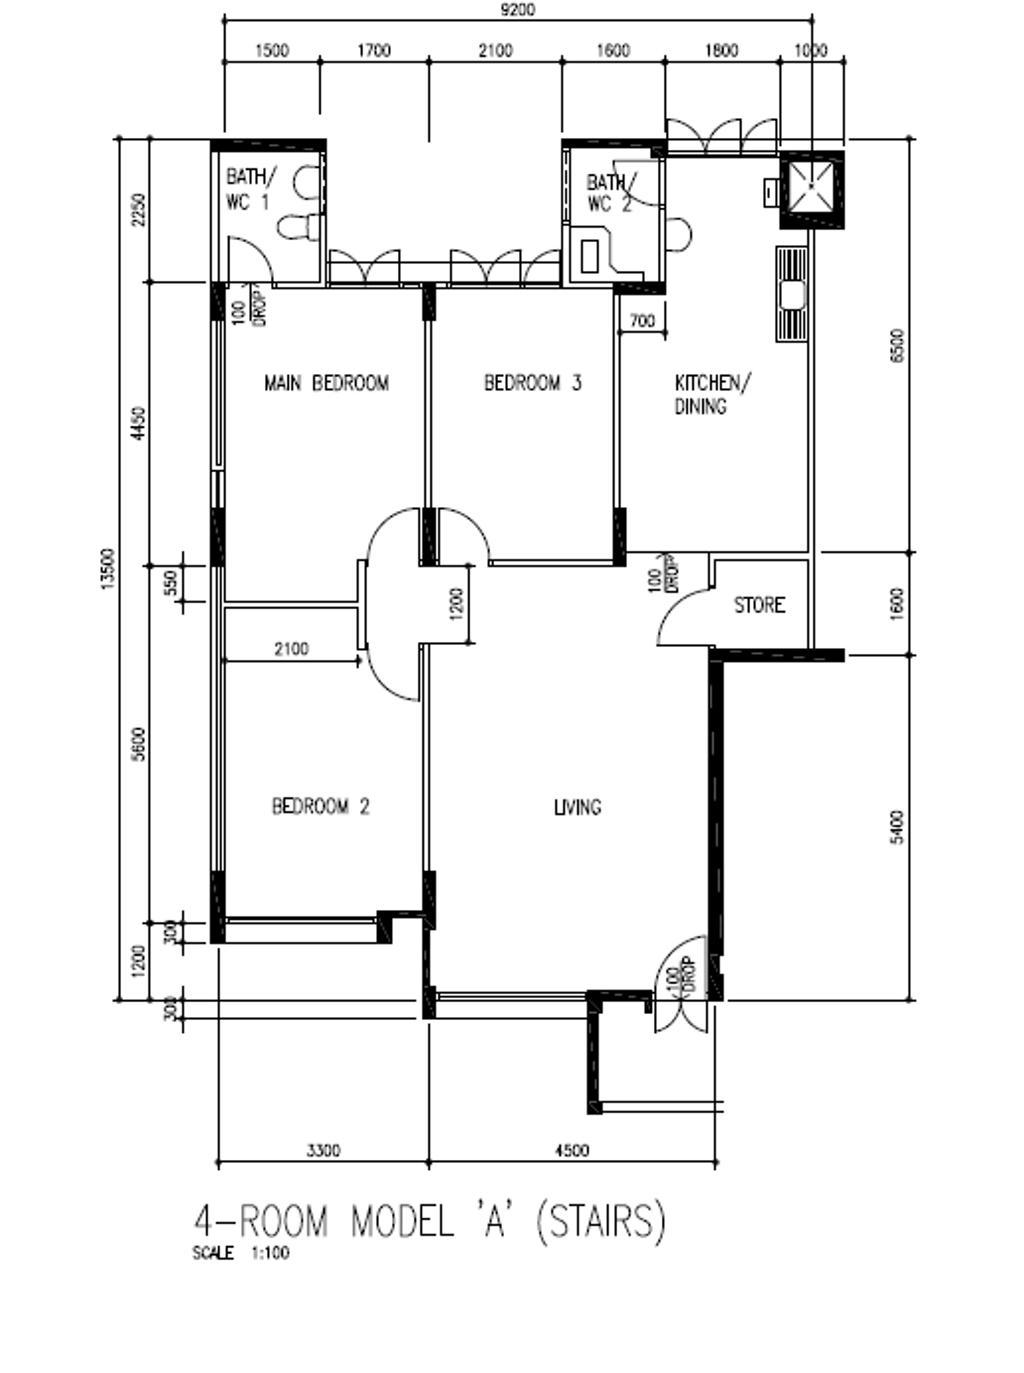 Scandinavian, HDB, Tampines, Interior Designer, Eames & Scales, Modern, 4 Room Hdb Floorplan, 4 Room Model A Stairs, Original Floorplan